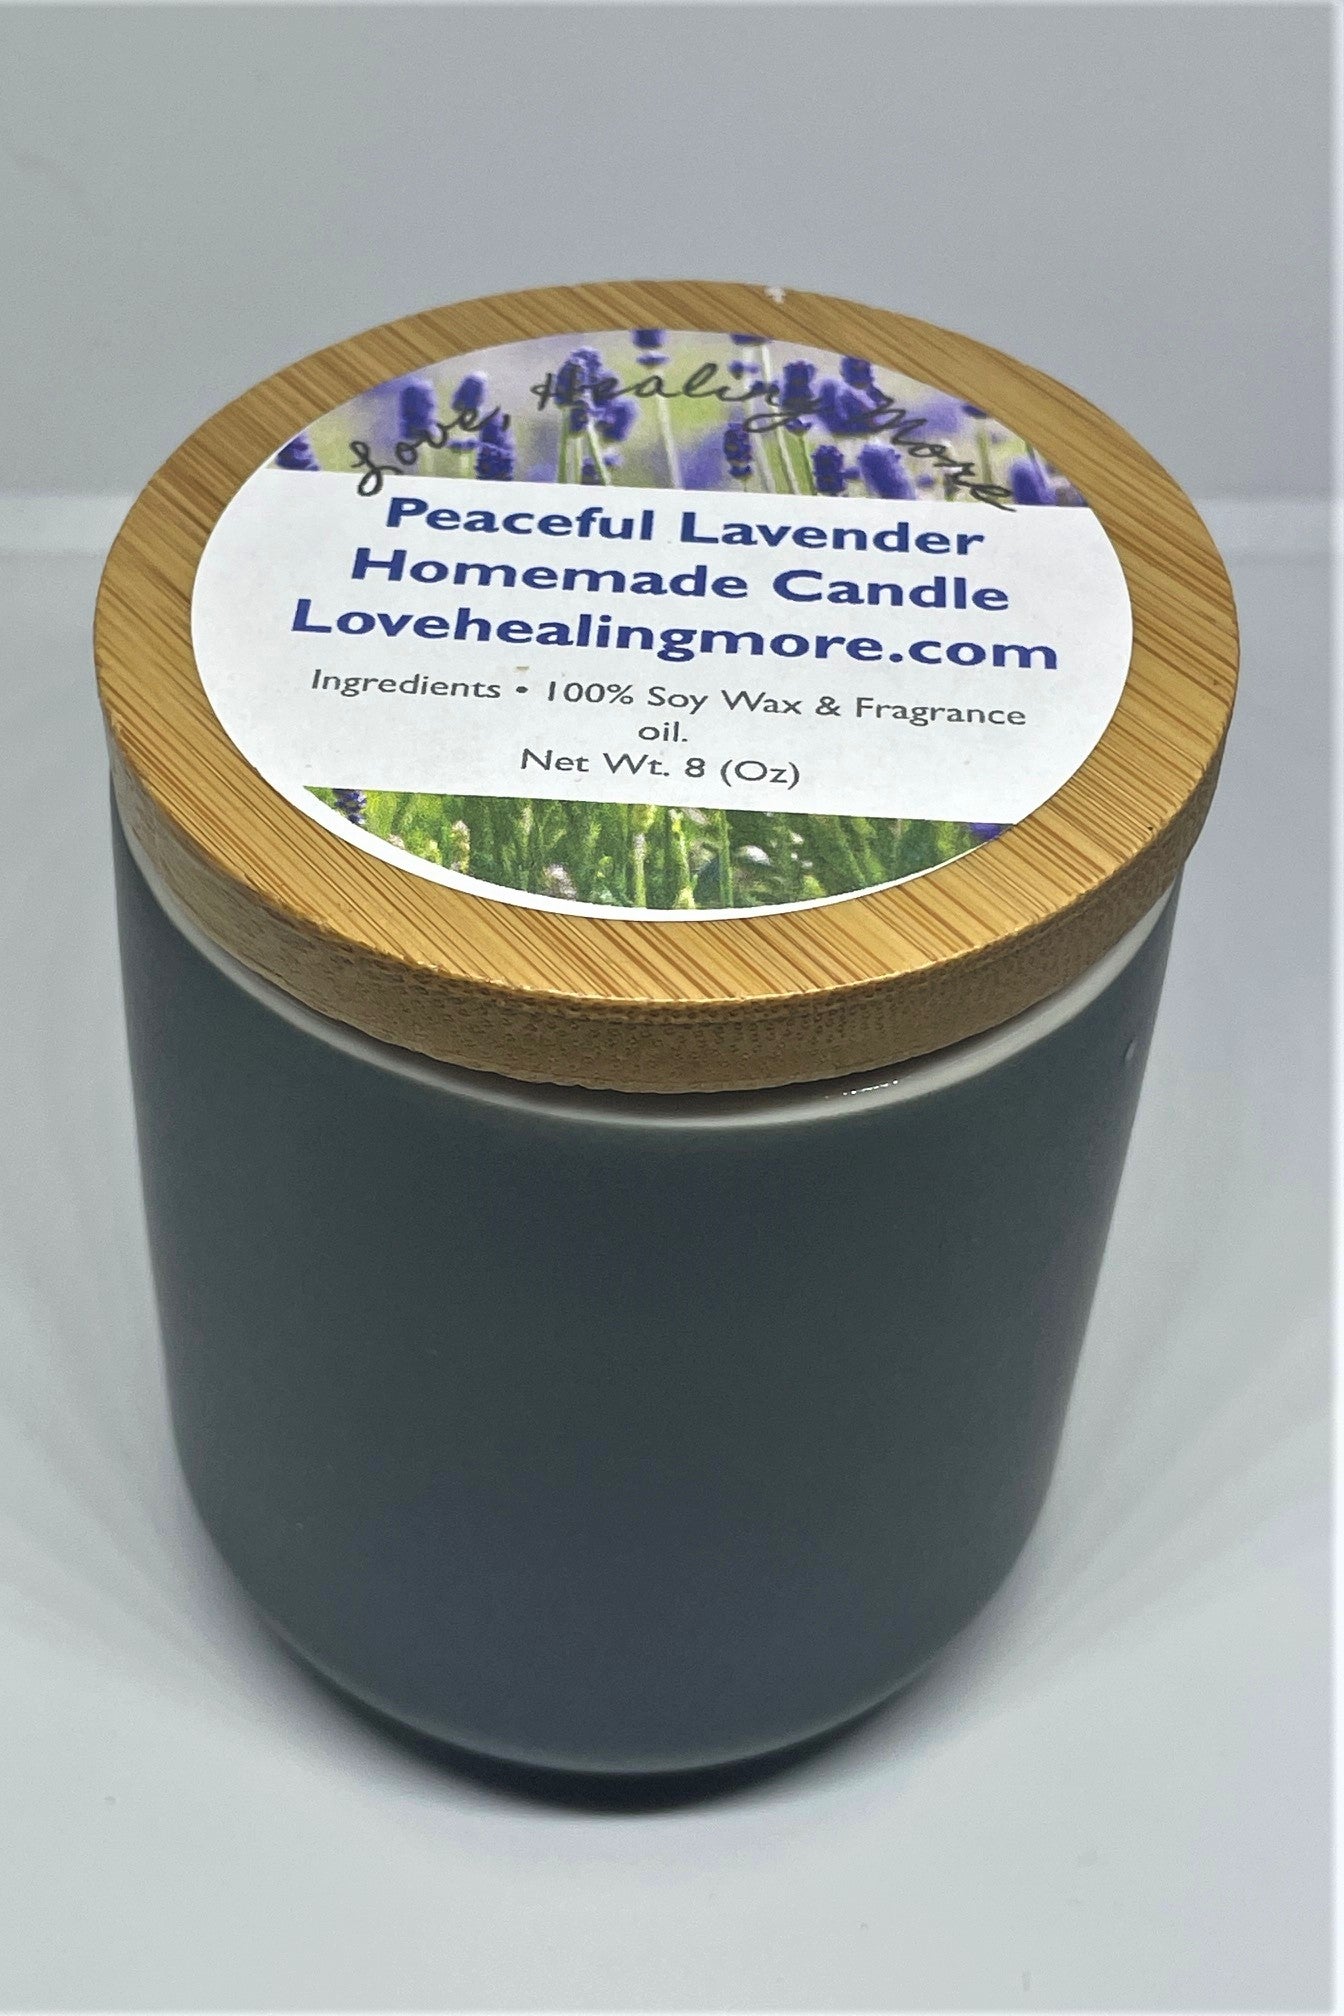 Handmade 8 oz. Peaceful Lavender Candle in Ceramic Jar